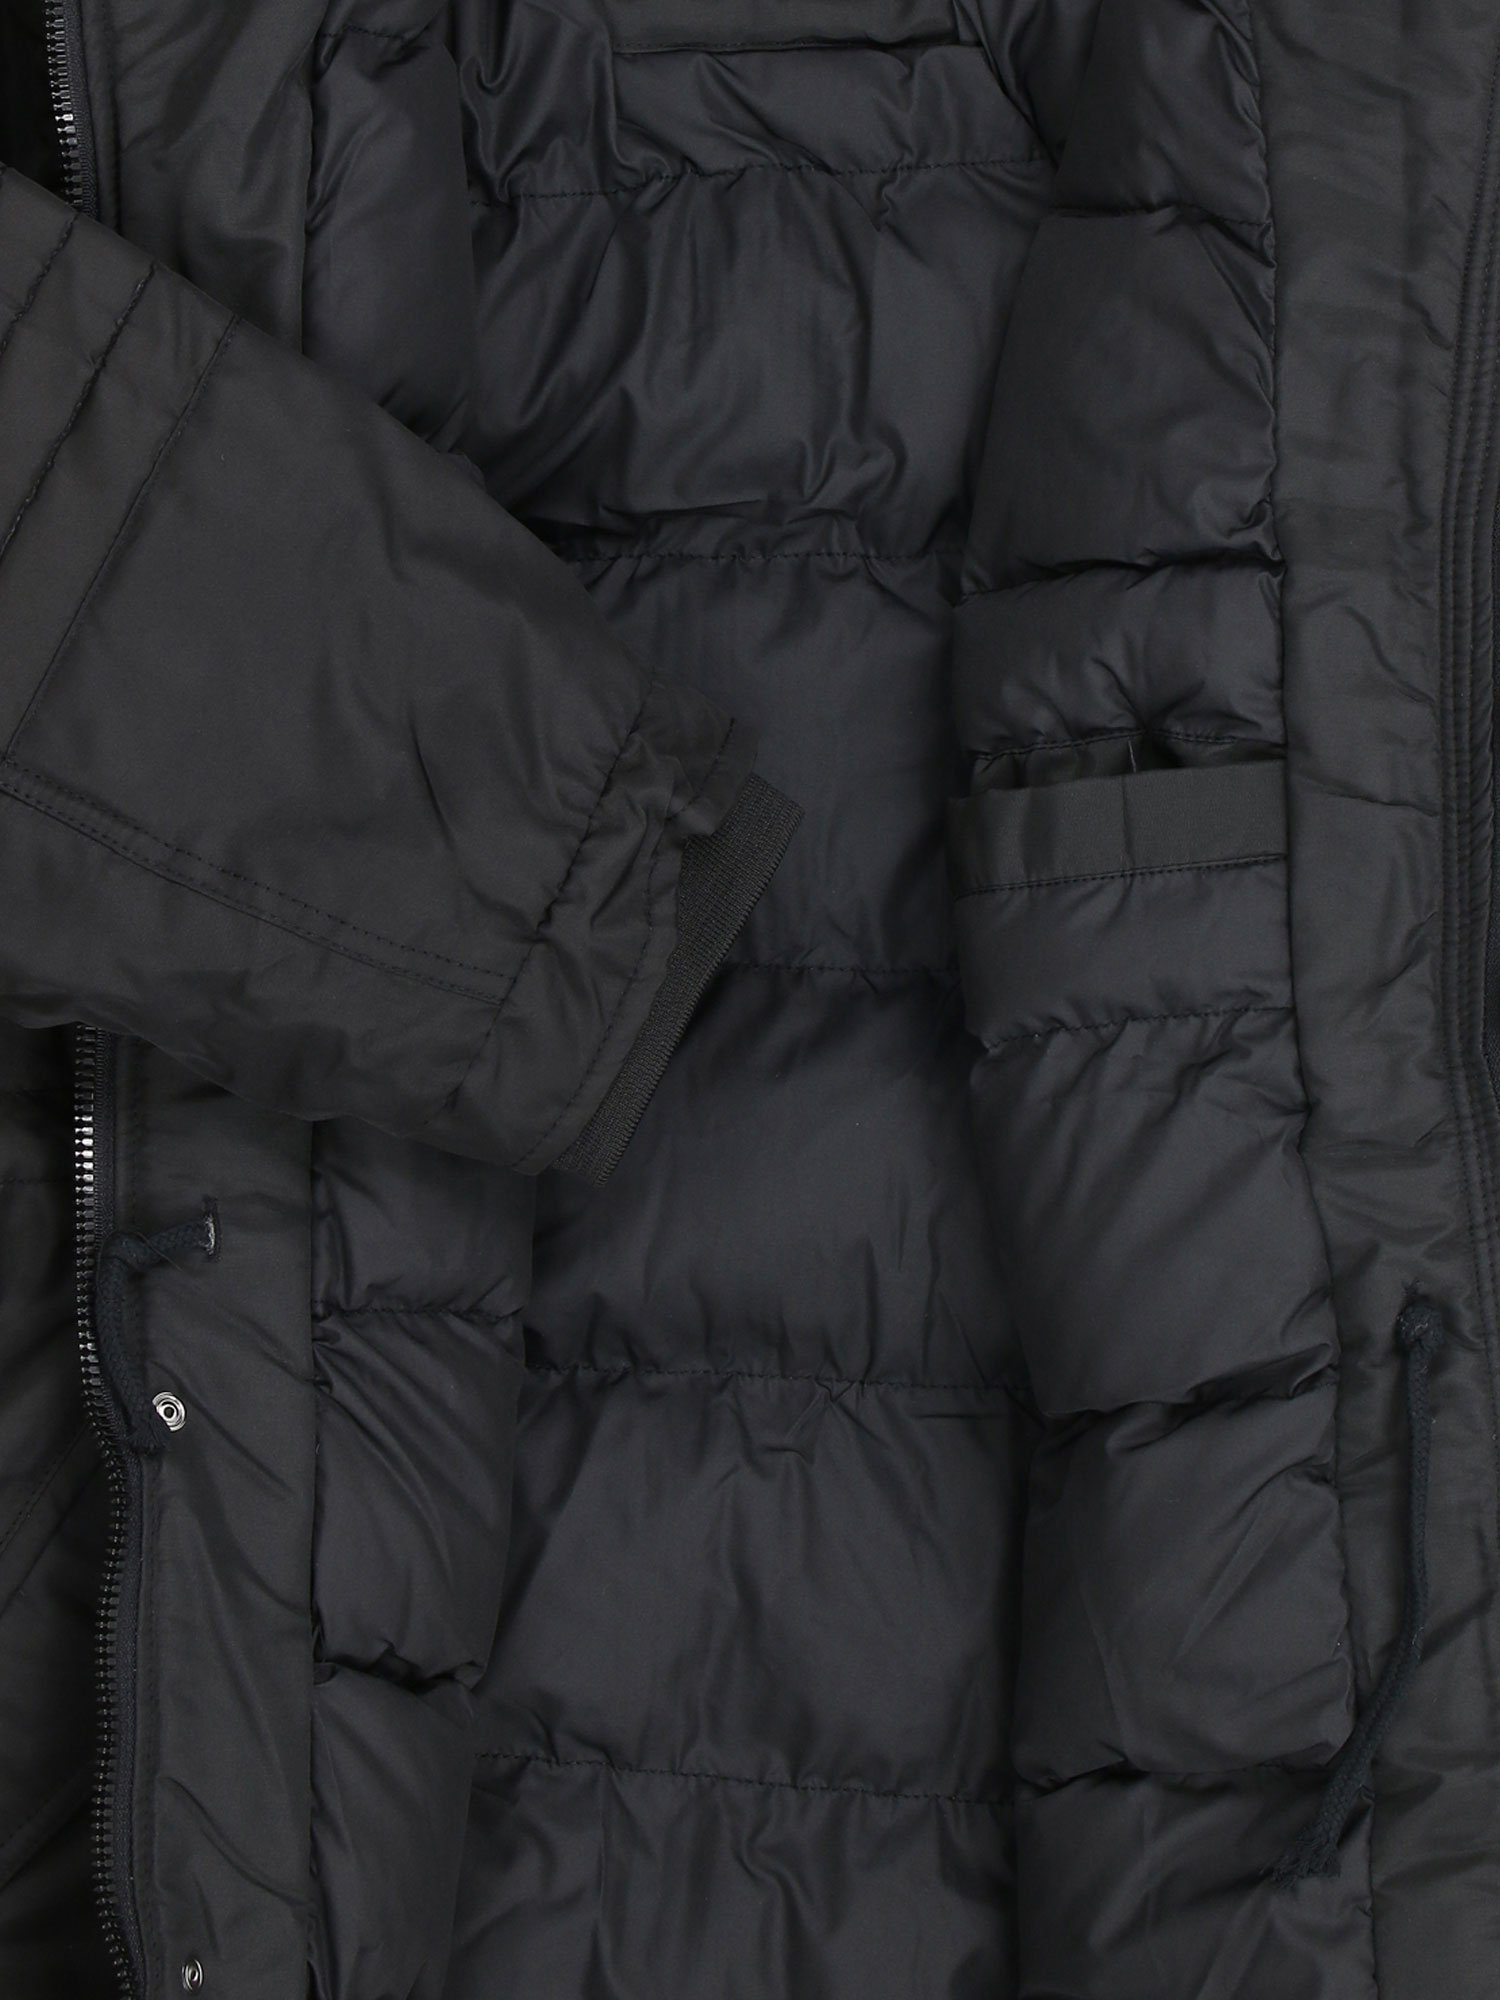 mit Kapuze schwarz Jacke gefütterterter abnehmbarer Übergrößen & Winterjacke Lavecchia LV-700